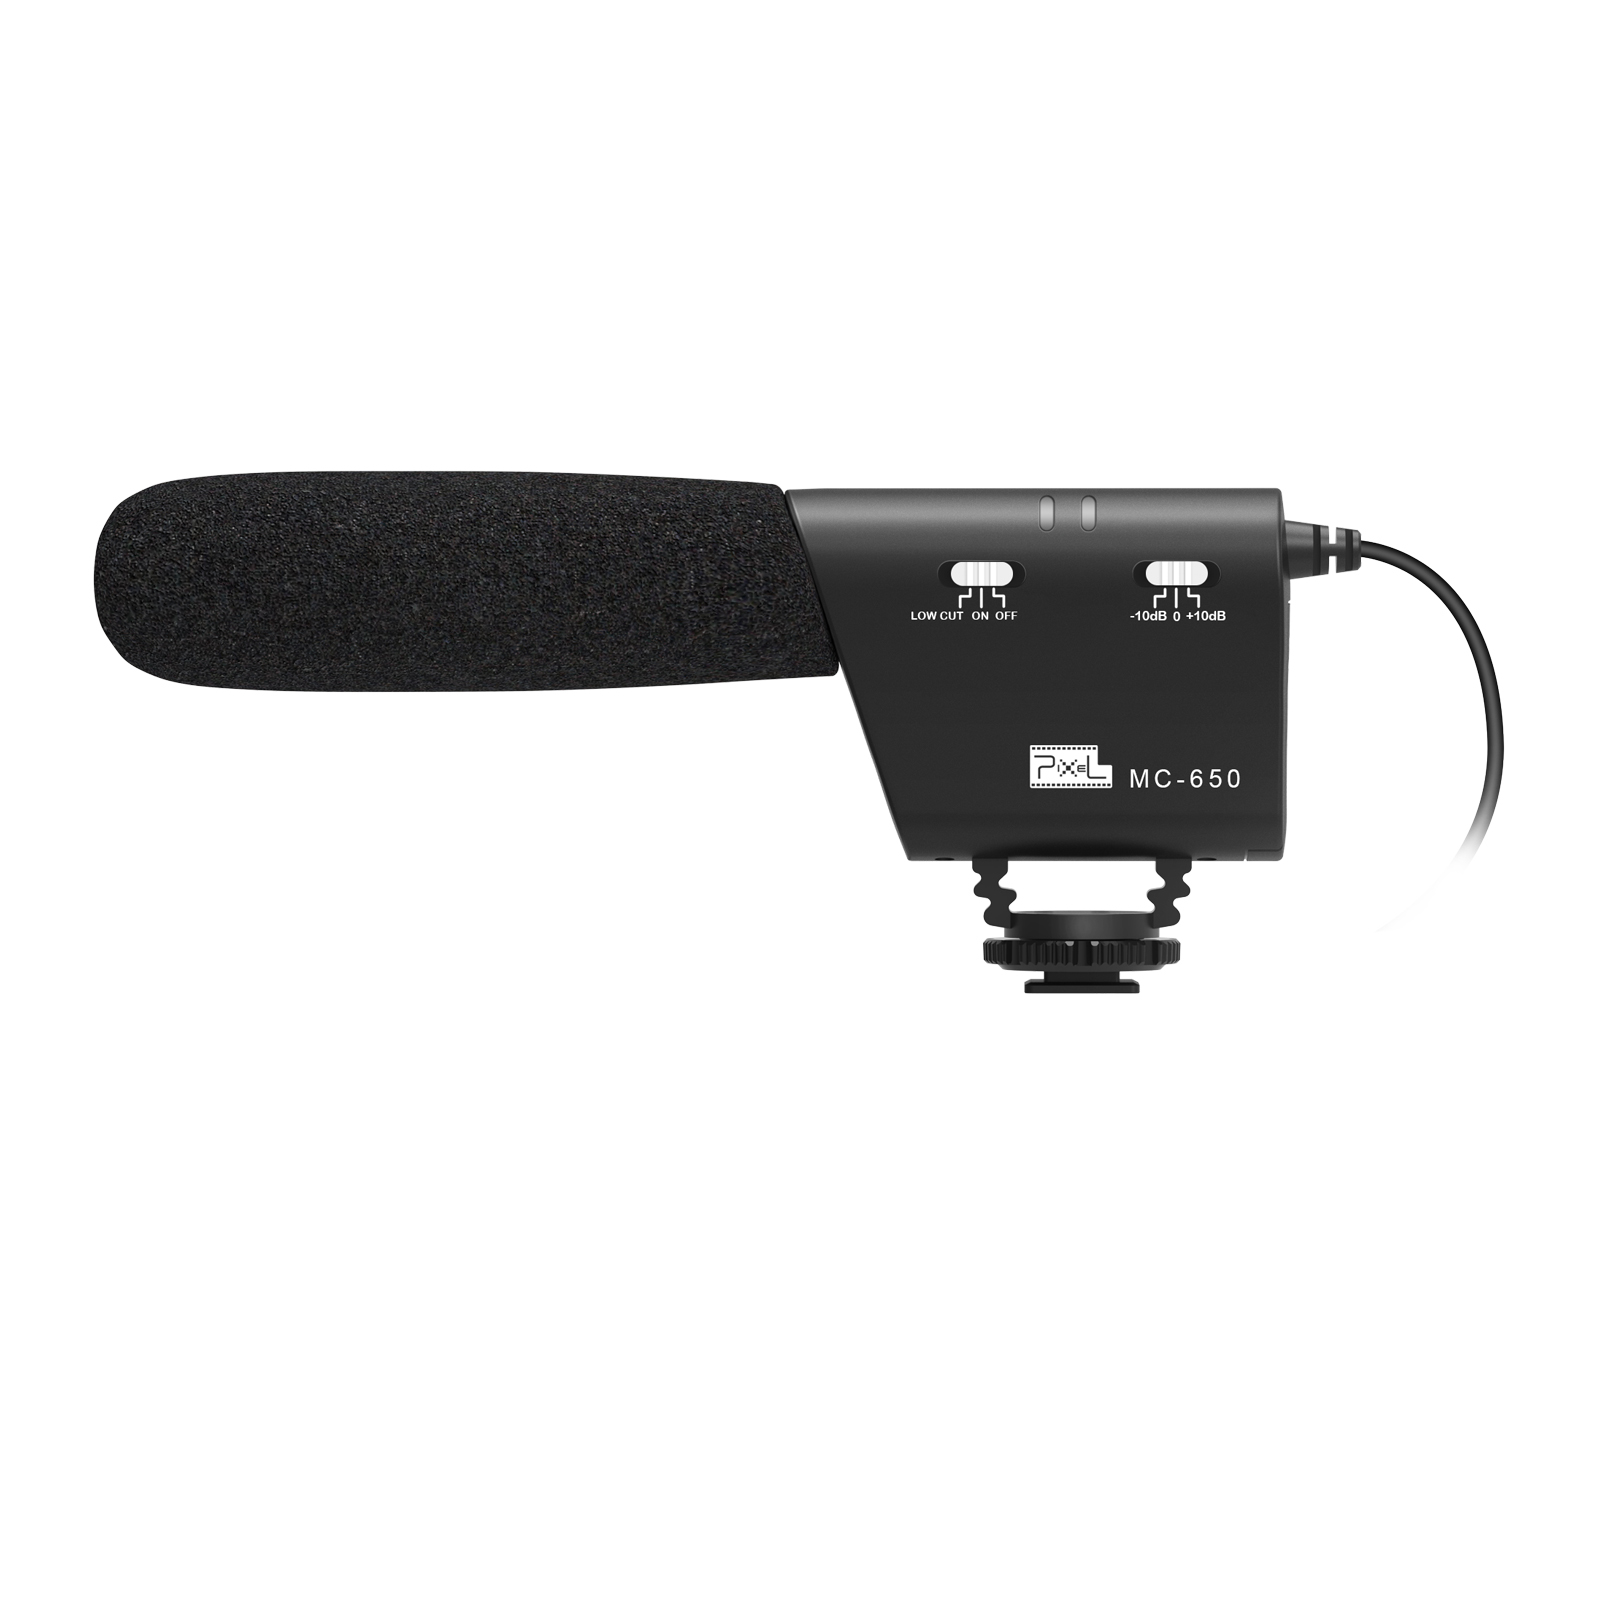 Pixel MC-650 Microphone, intelligent noise reduction and comprehensive radio